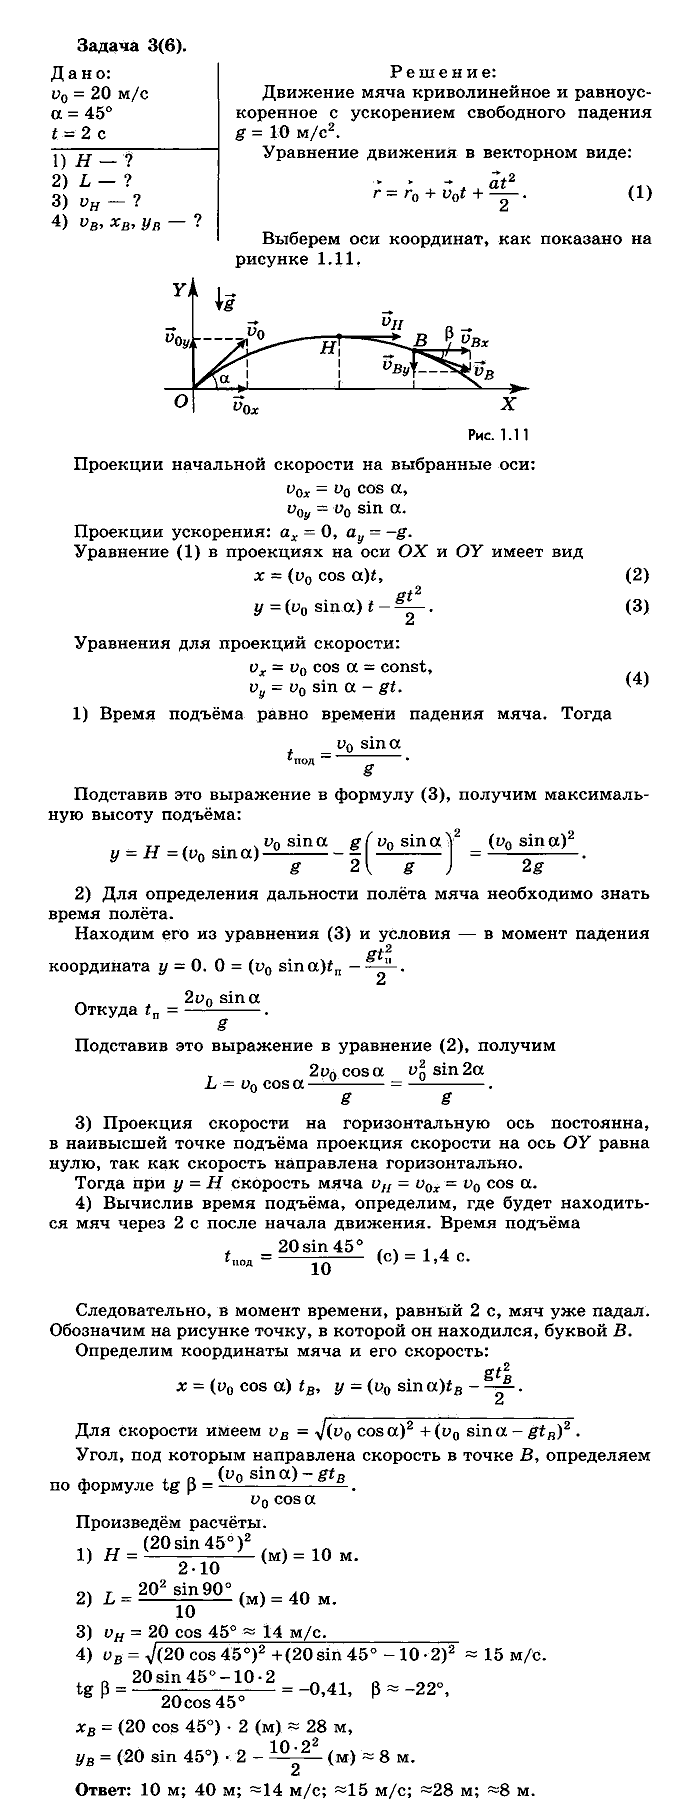 Физика, 10 класс, Мякишев, Буховцев, Чаругин, 2014, Упражнение 4 Задача: 3(6)